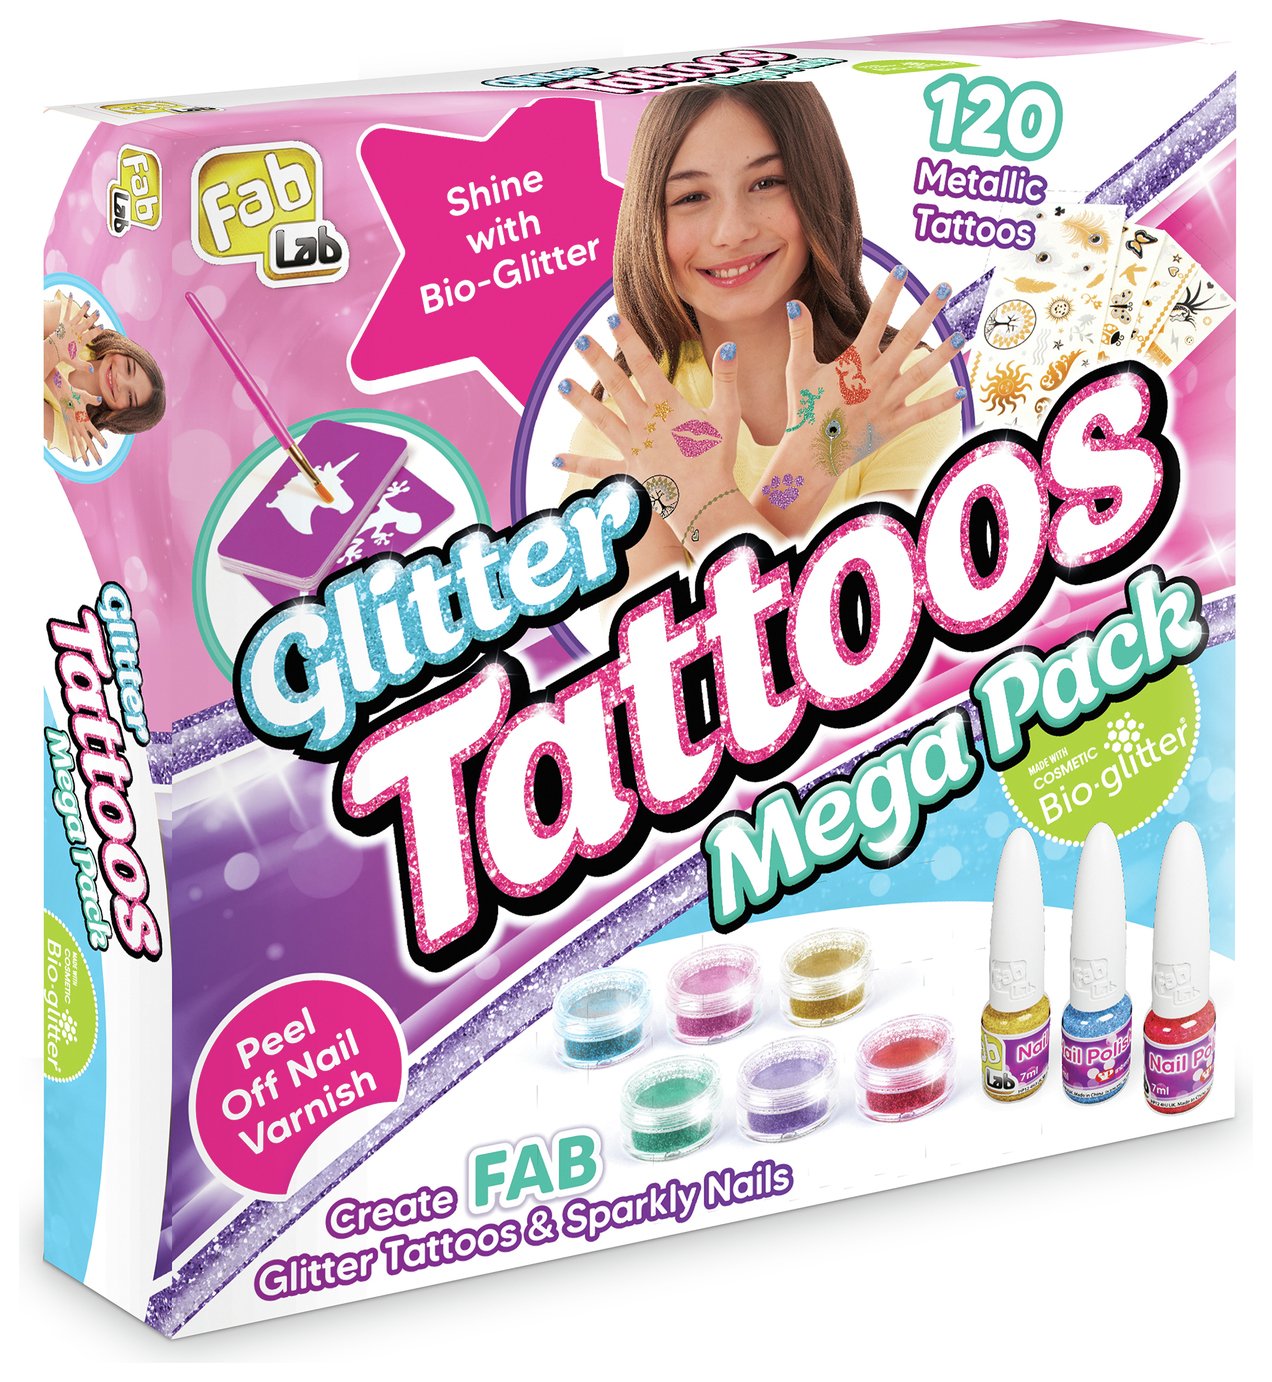 FabLab Glitter Tattoos Mega Pack Review